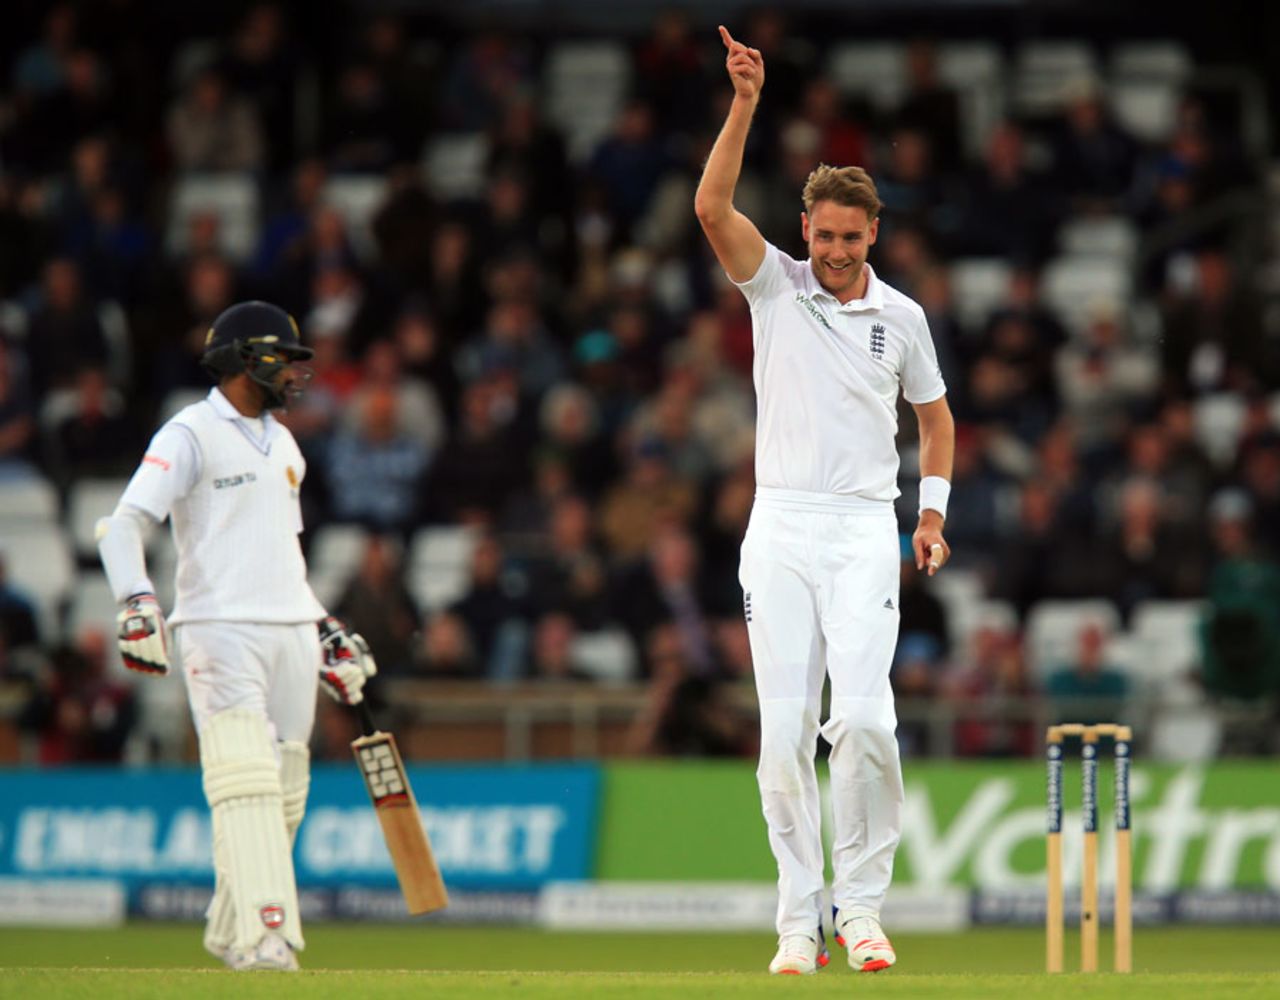 Stuart Broad finished with 4 for 21, England v Sri Lanka, 1st Test, Headingley, 2nd day, May 20, 2016